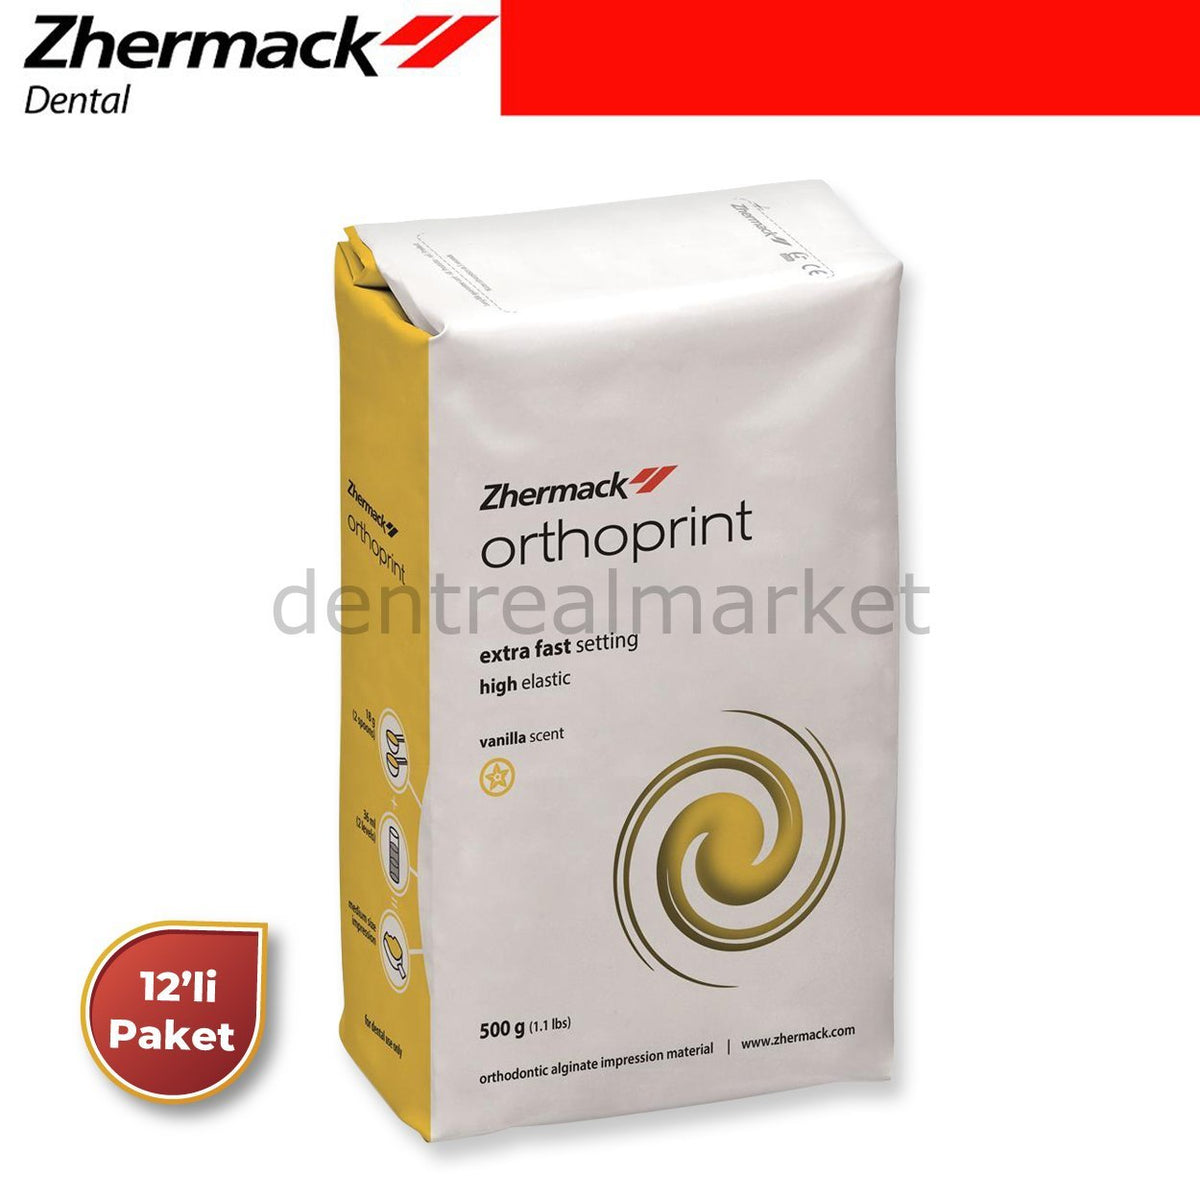 DentrealStore - Zhermack Orthoprint - Alginate Extra Fast - Impression for Orthodontics - 12 Pcs